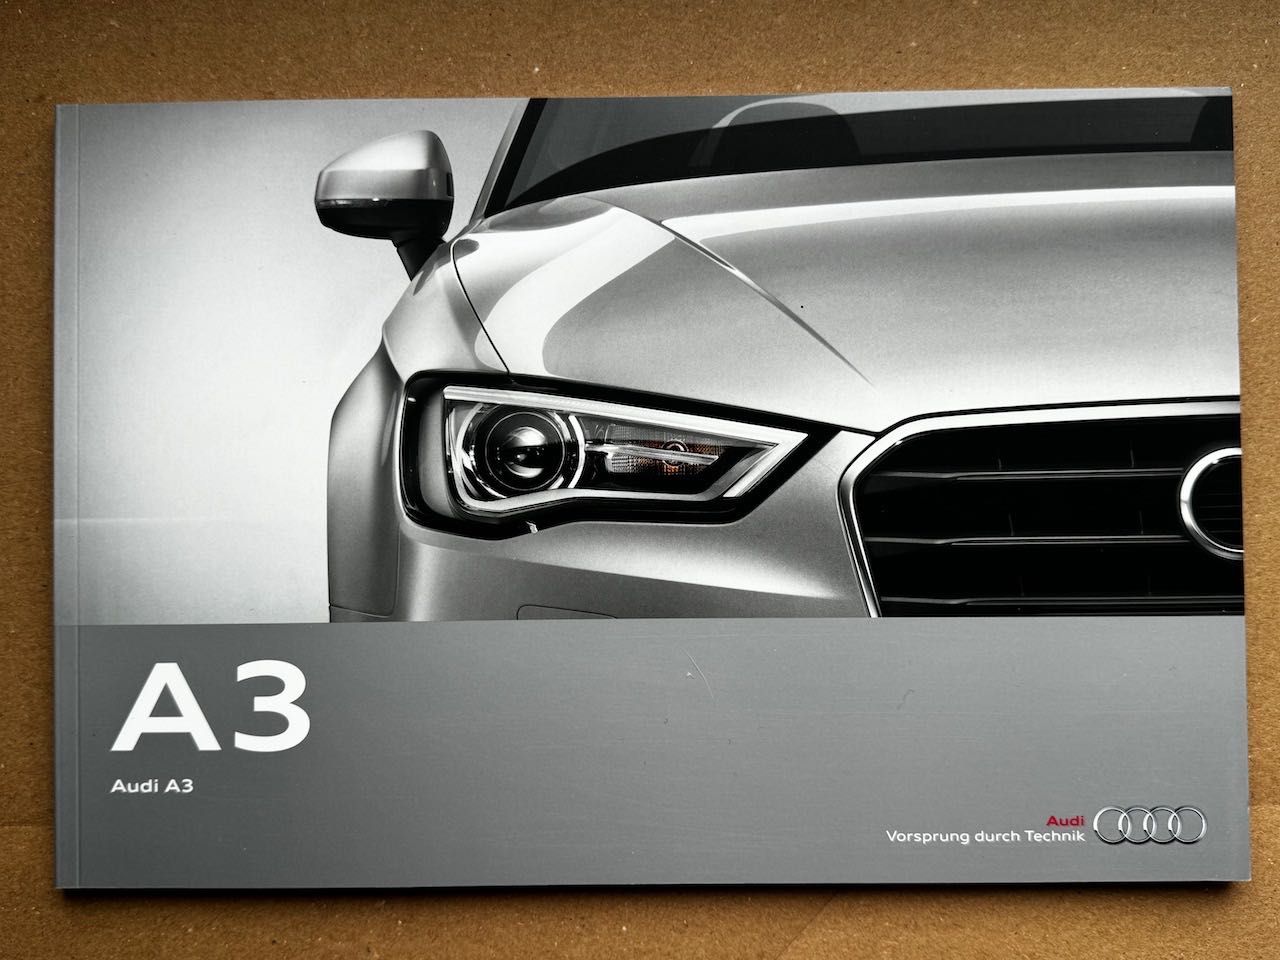 2012 / Audi A3 (8V) / DE / prospekt katalog